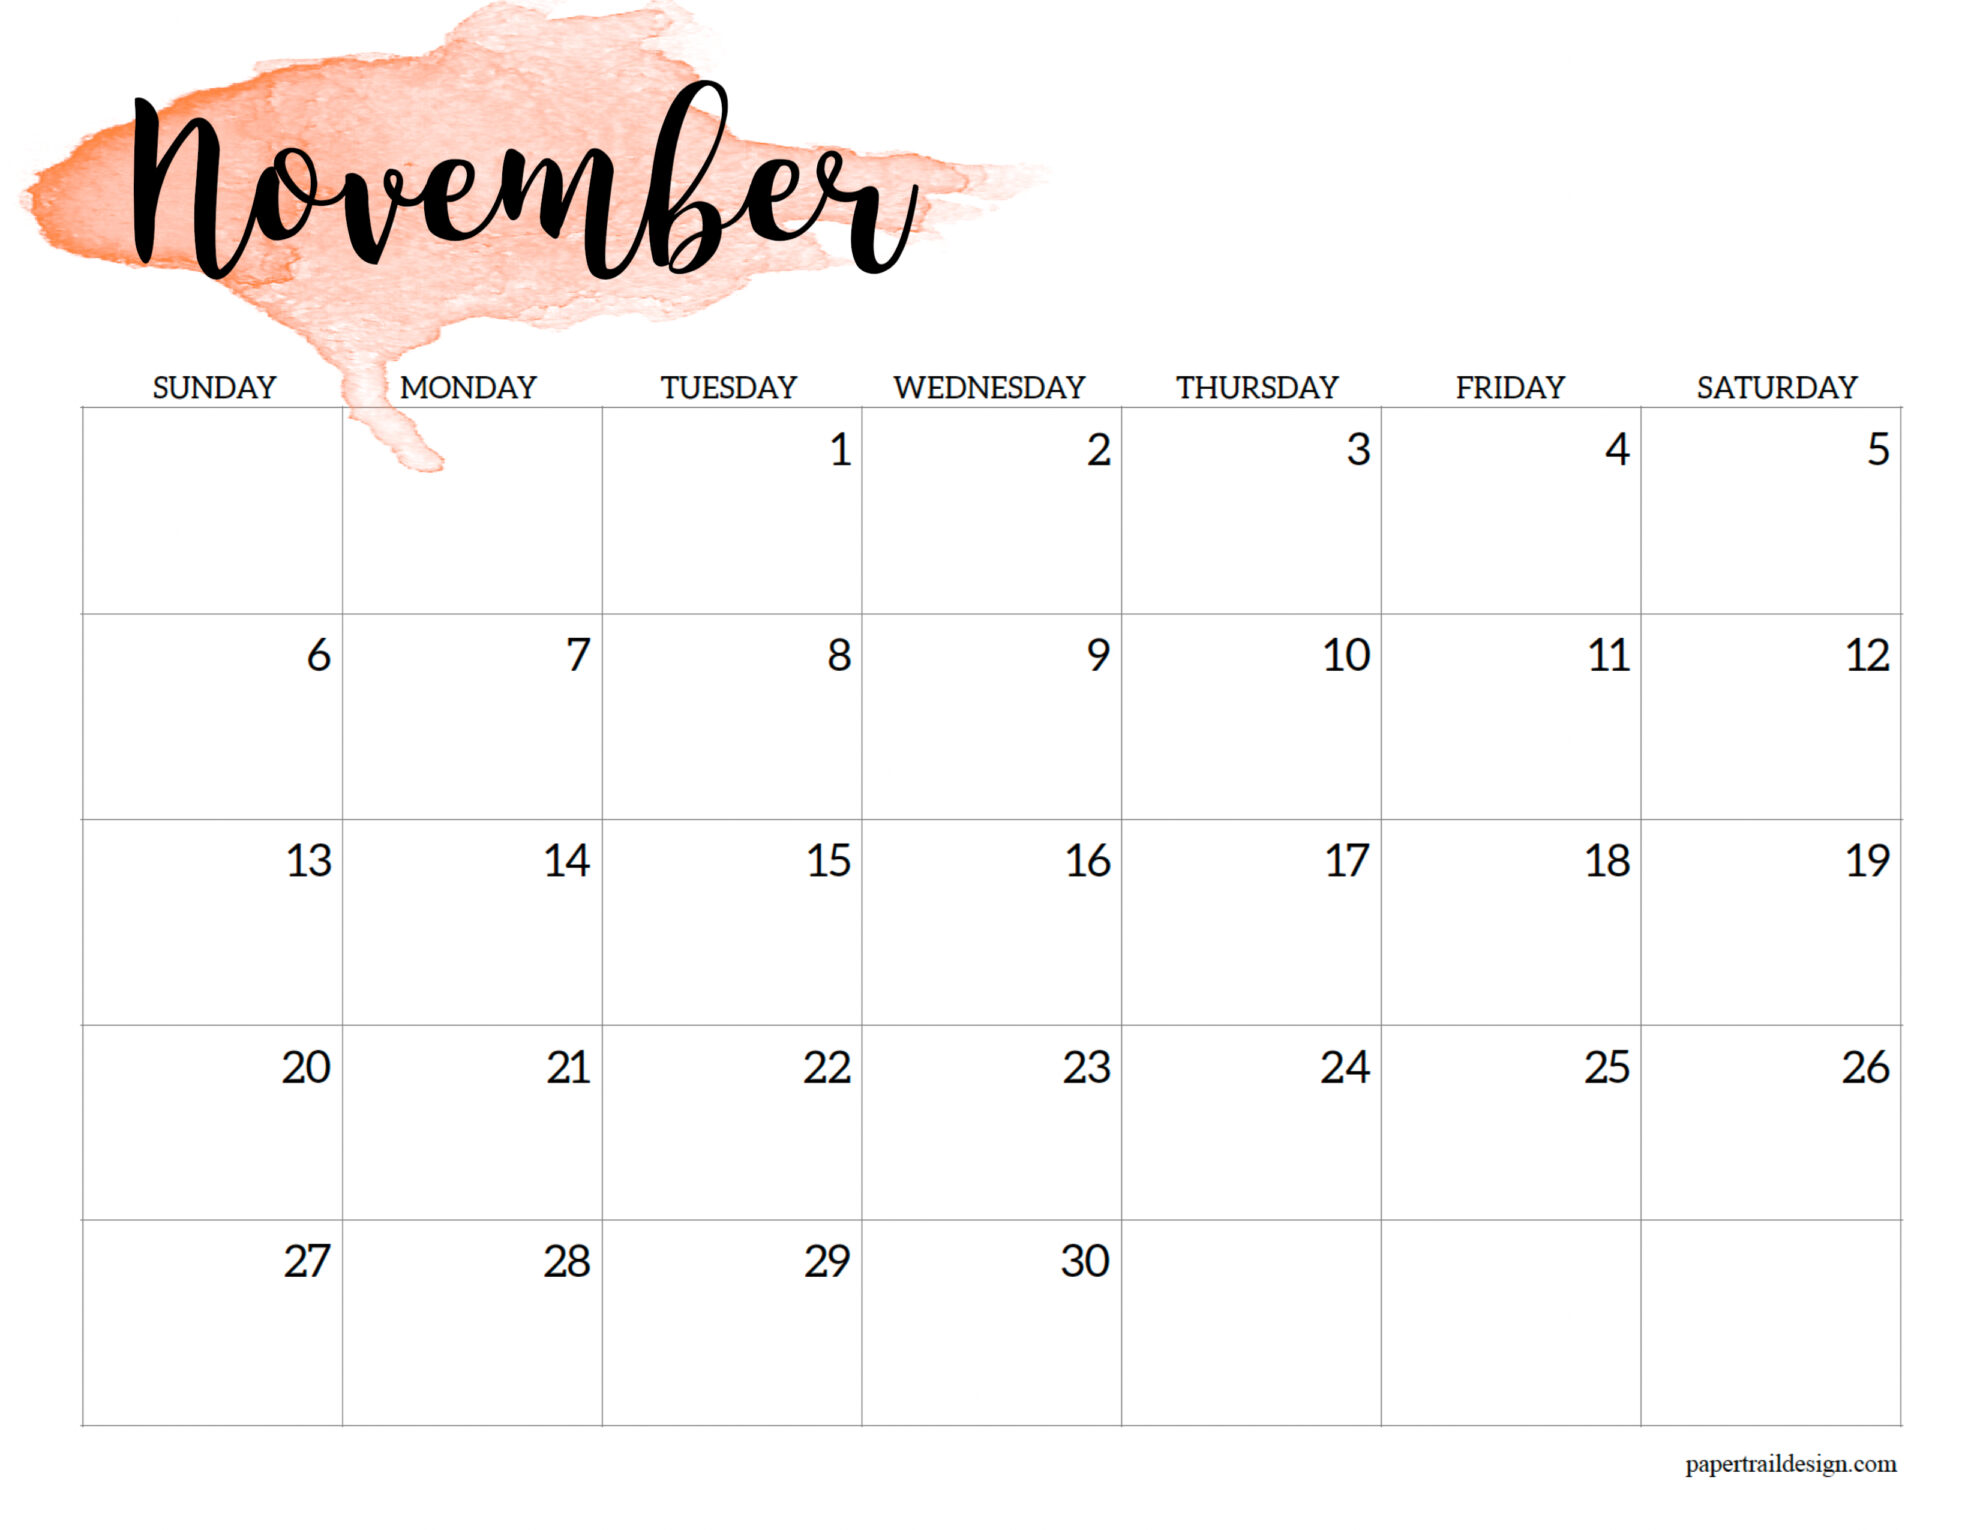 november 2022 calendar printable pdf